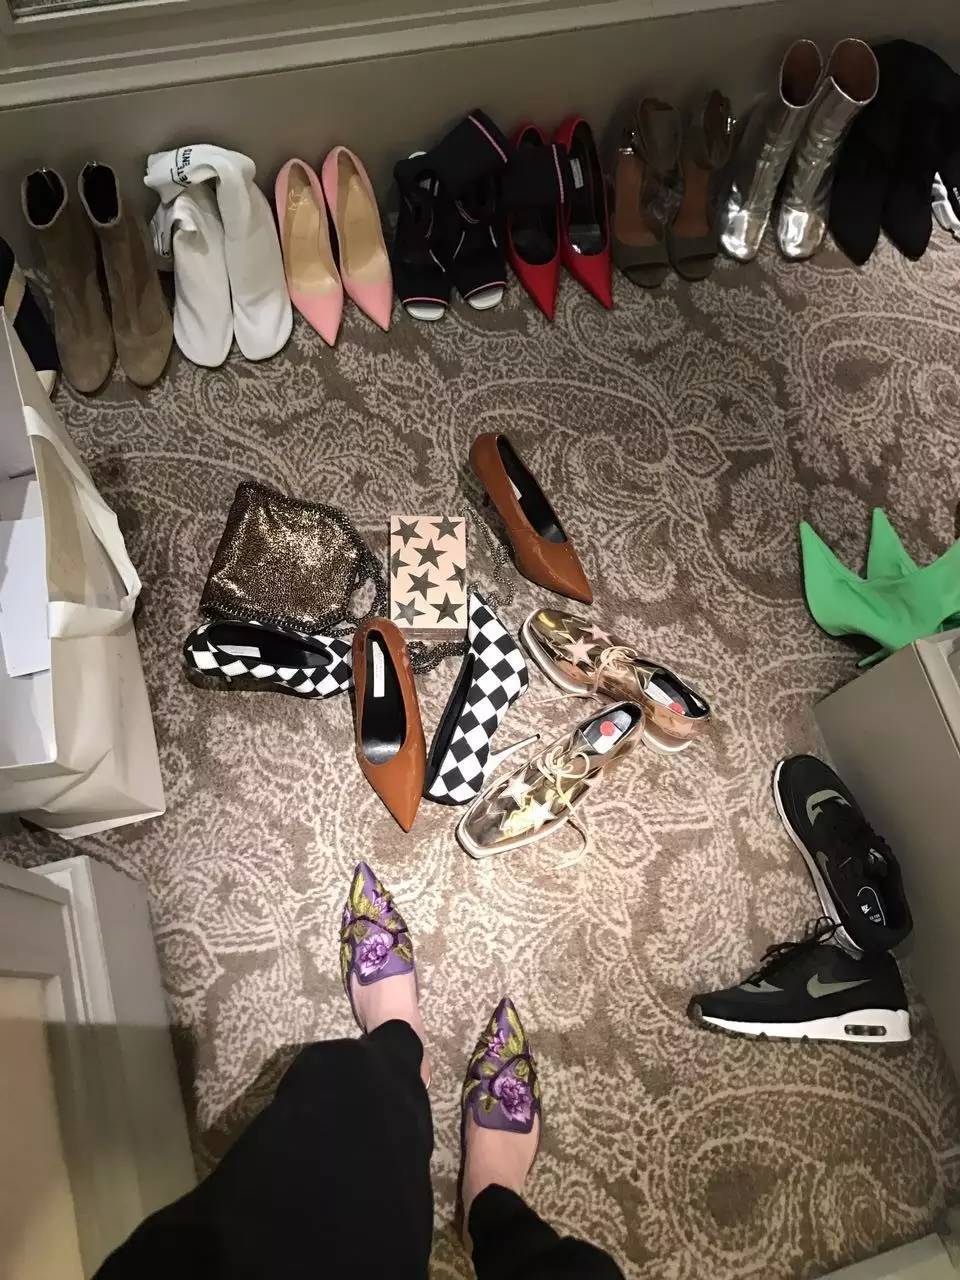 x:最近买了一堆鞋!